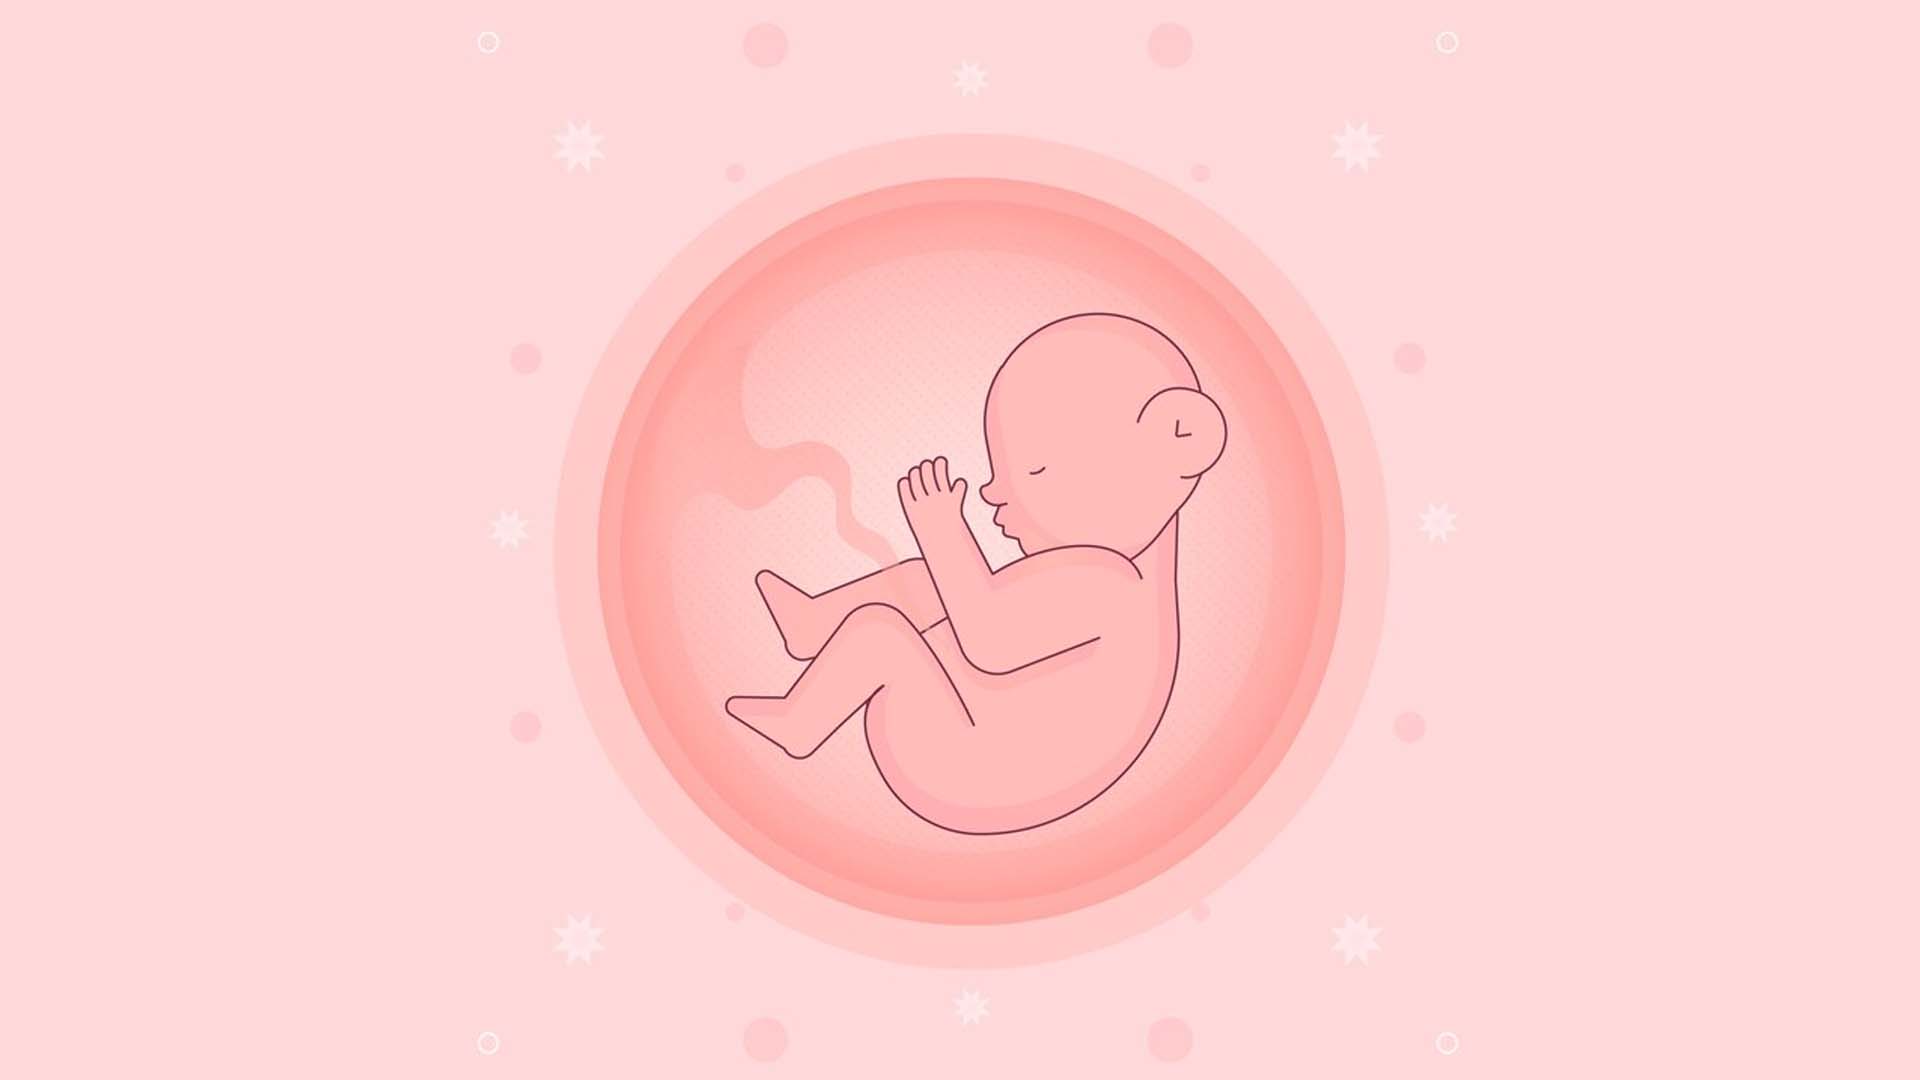 Baby in Amniotic Fluid Illustration